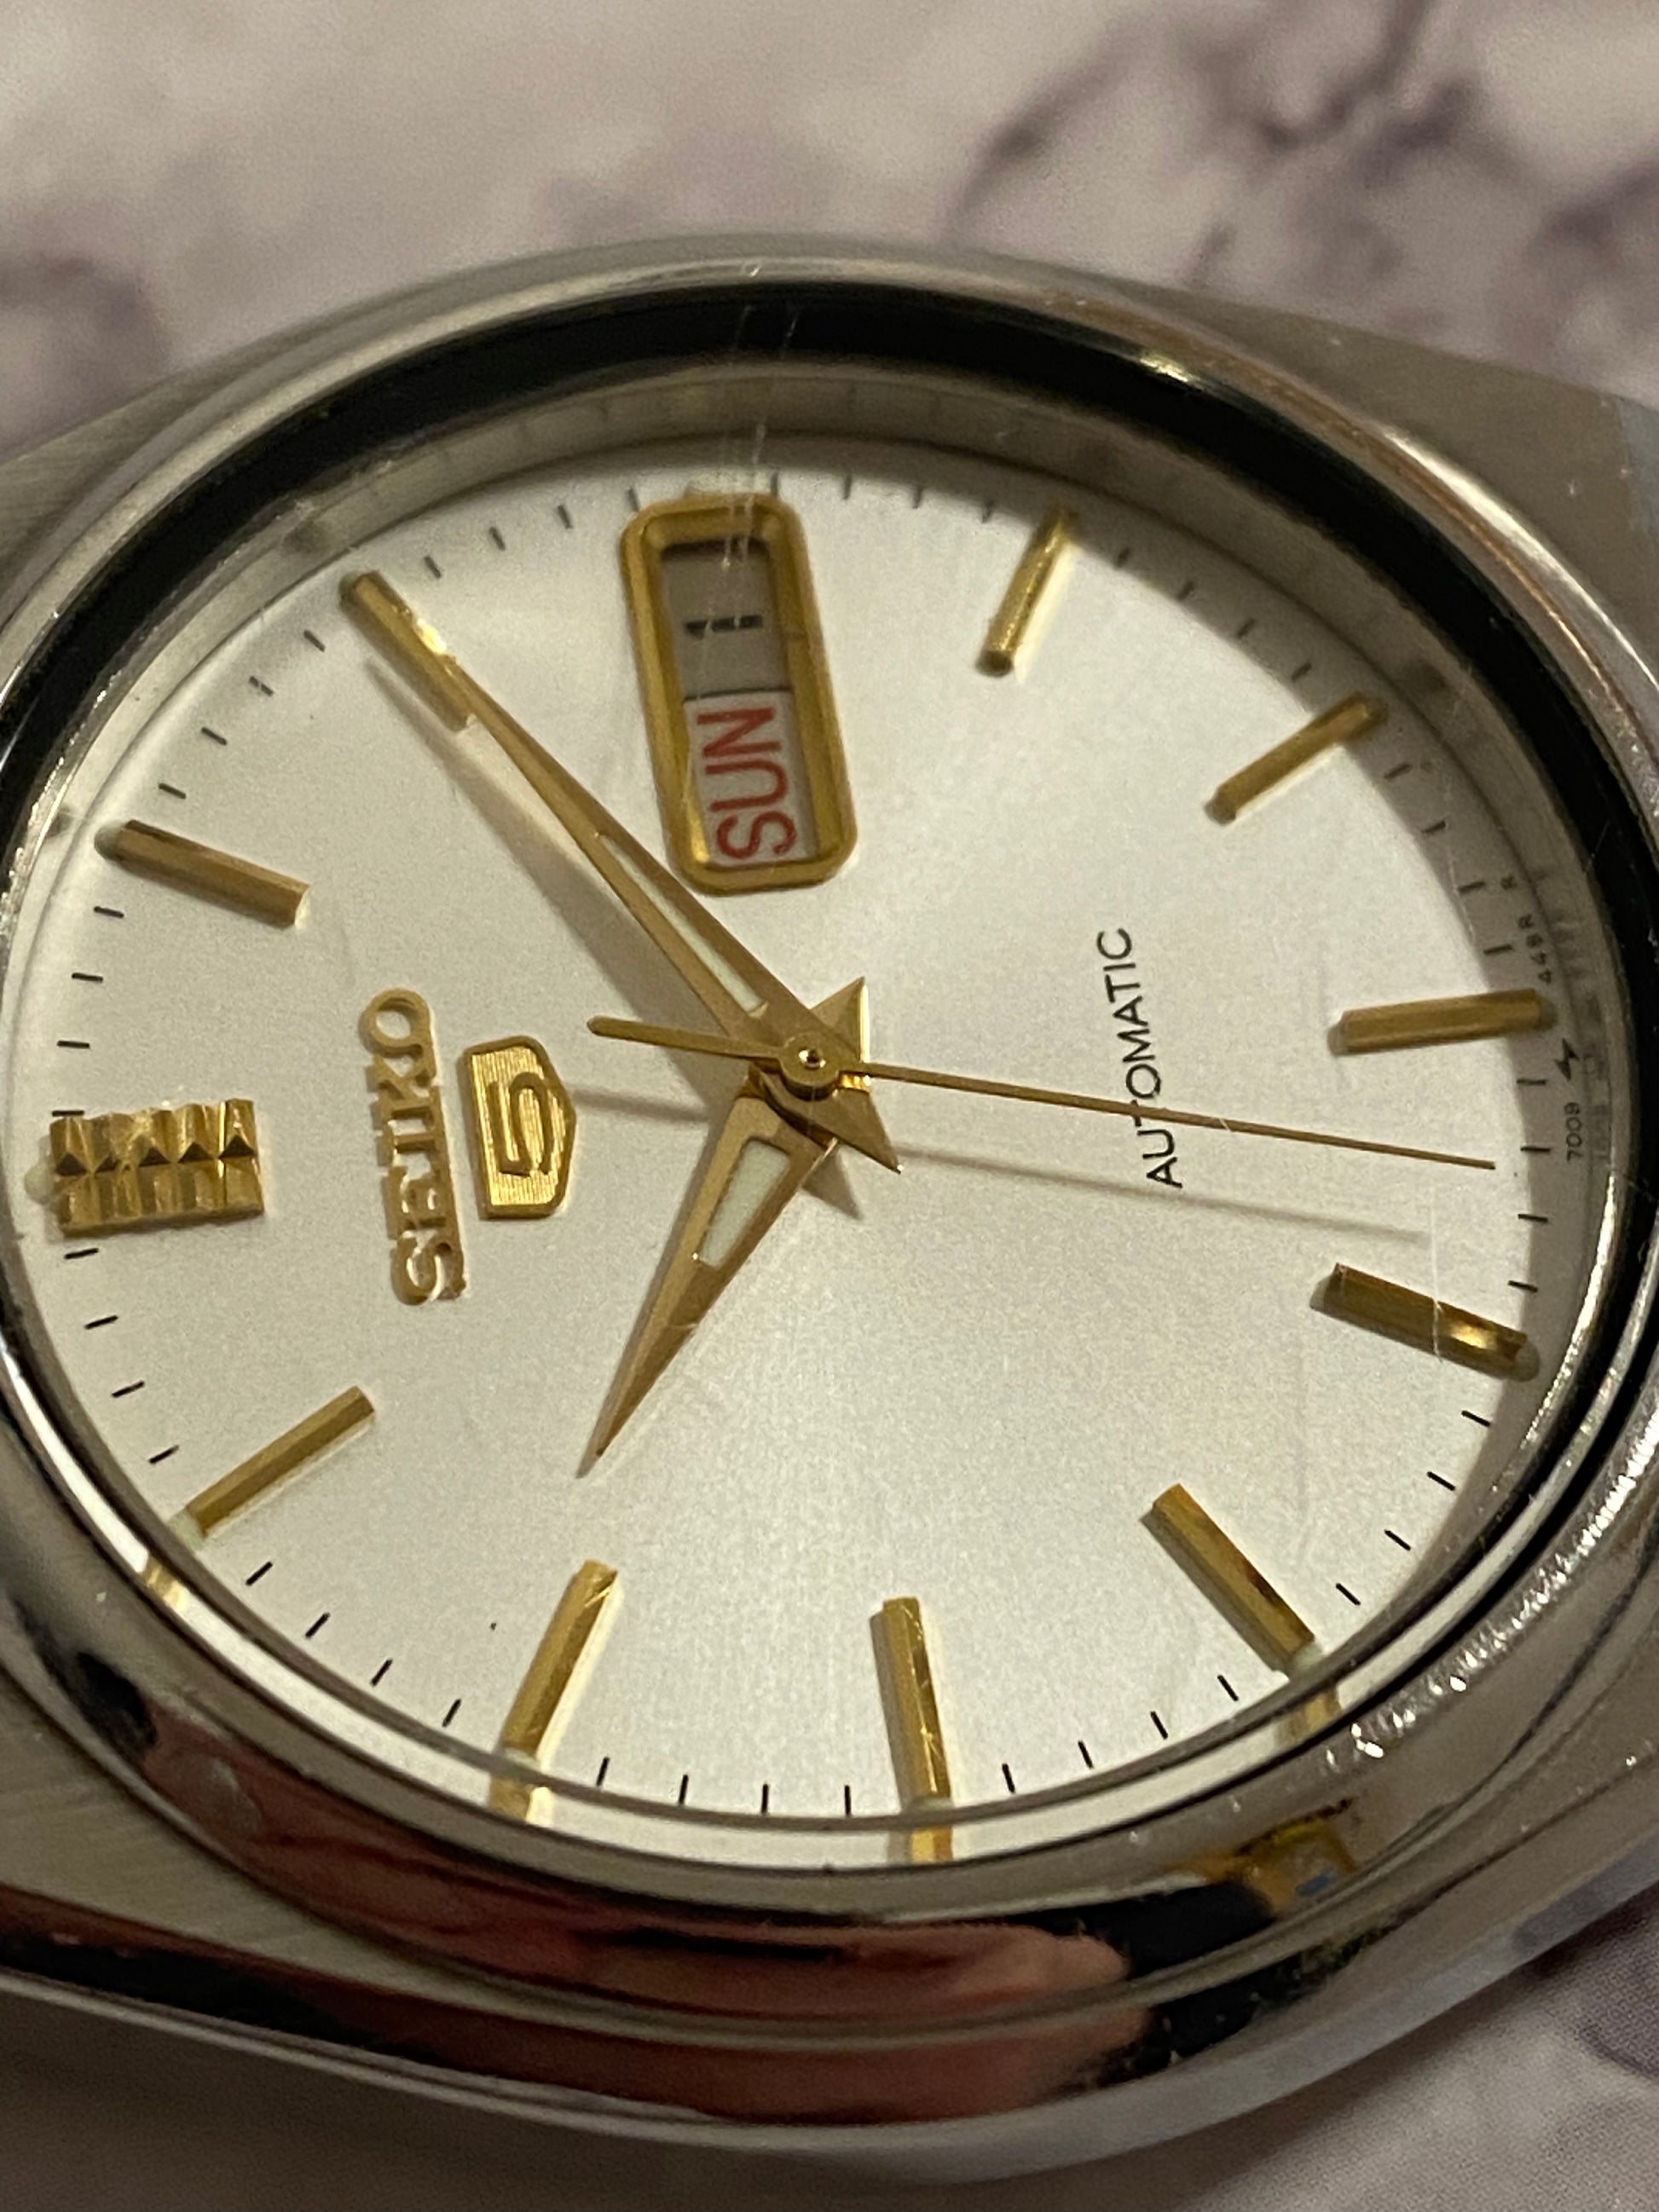 Seiko 5 Day-Date 7009-876A 1995 – The Wrist Watcher